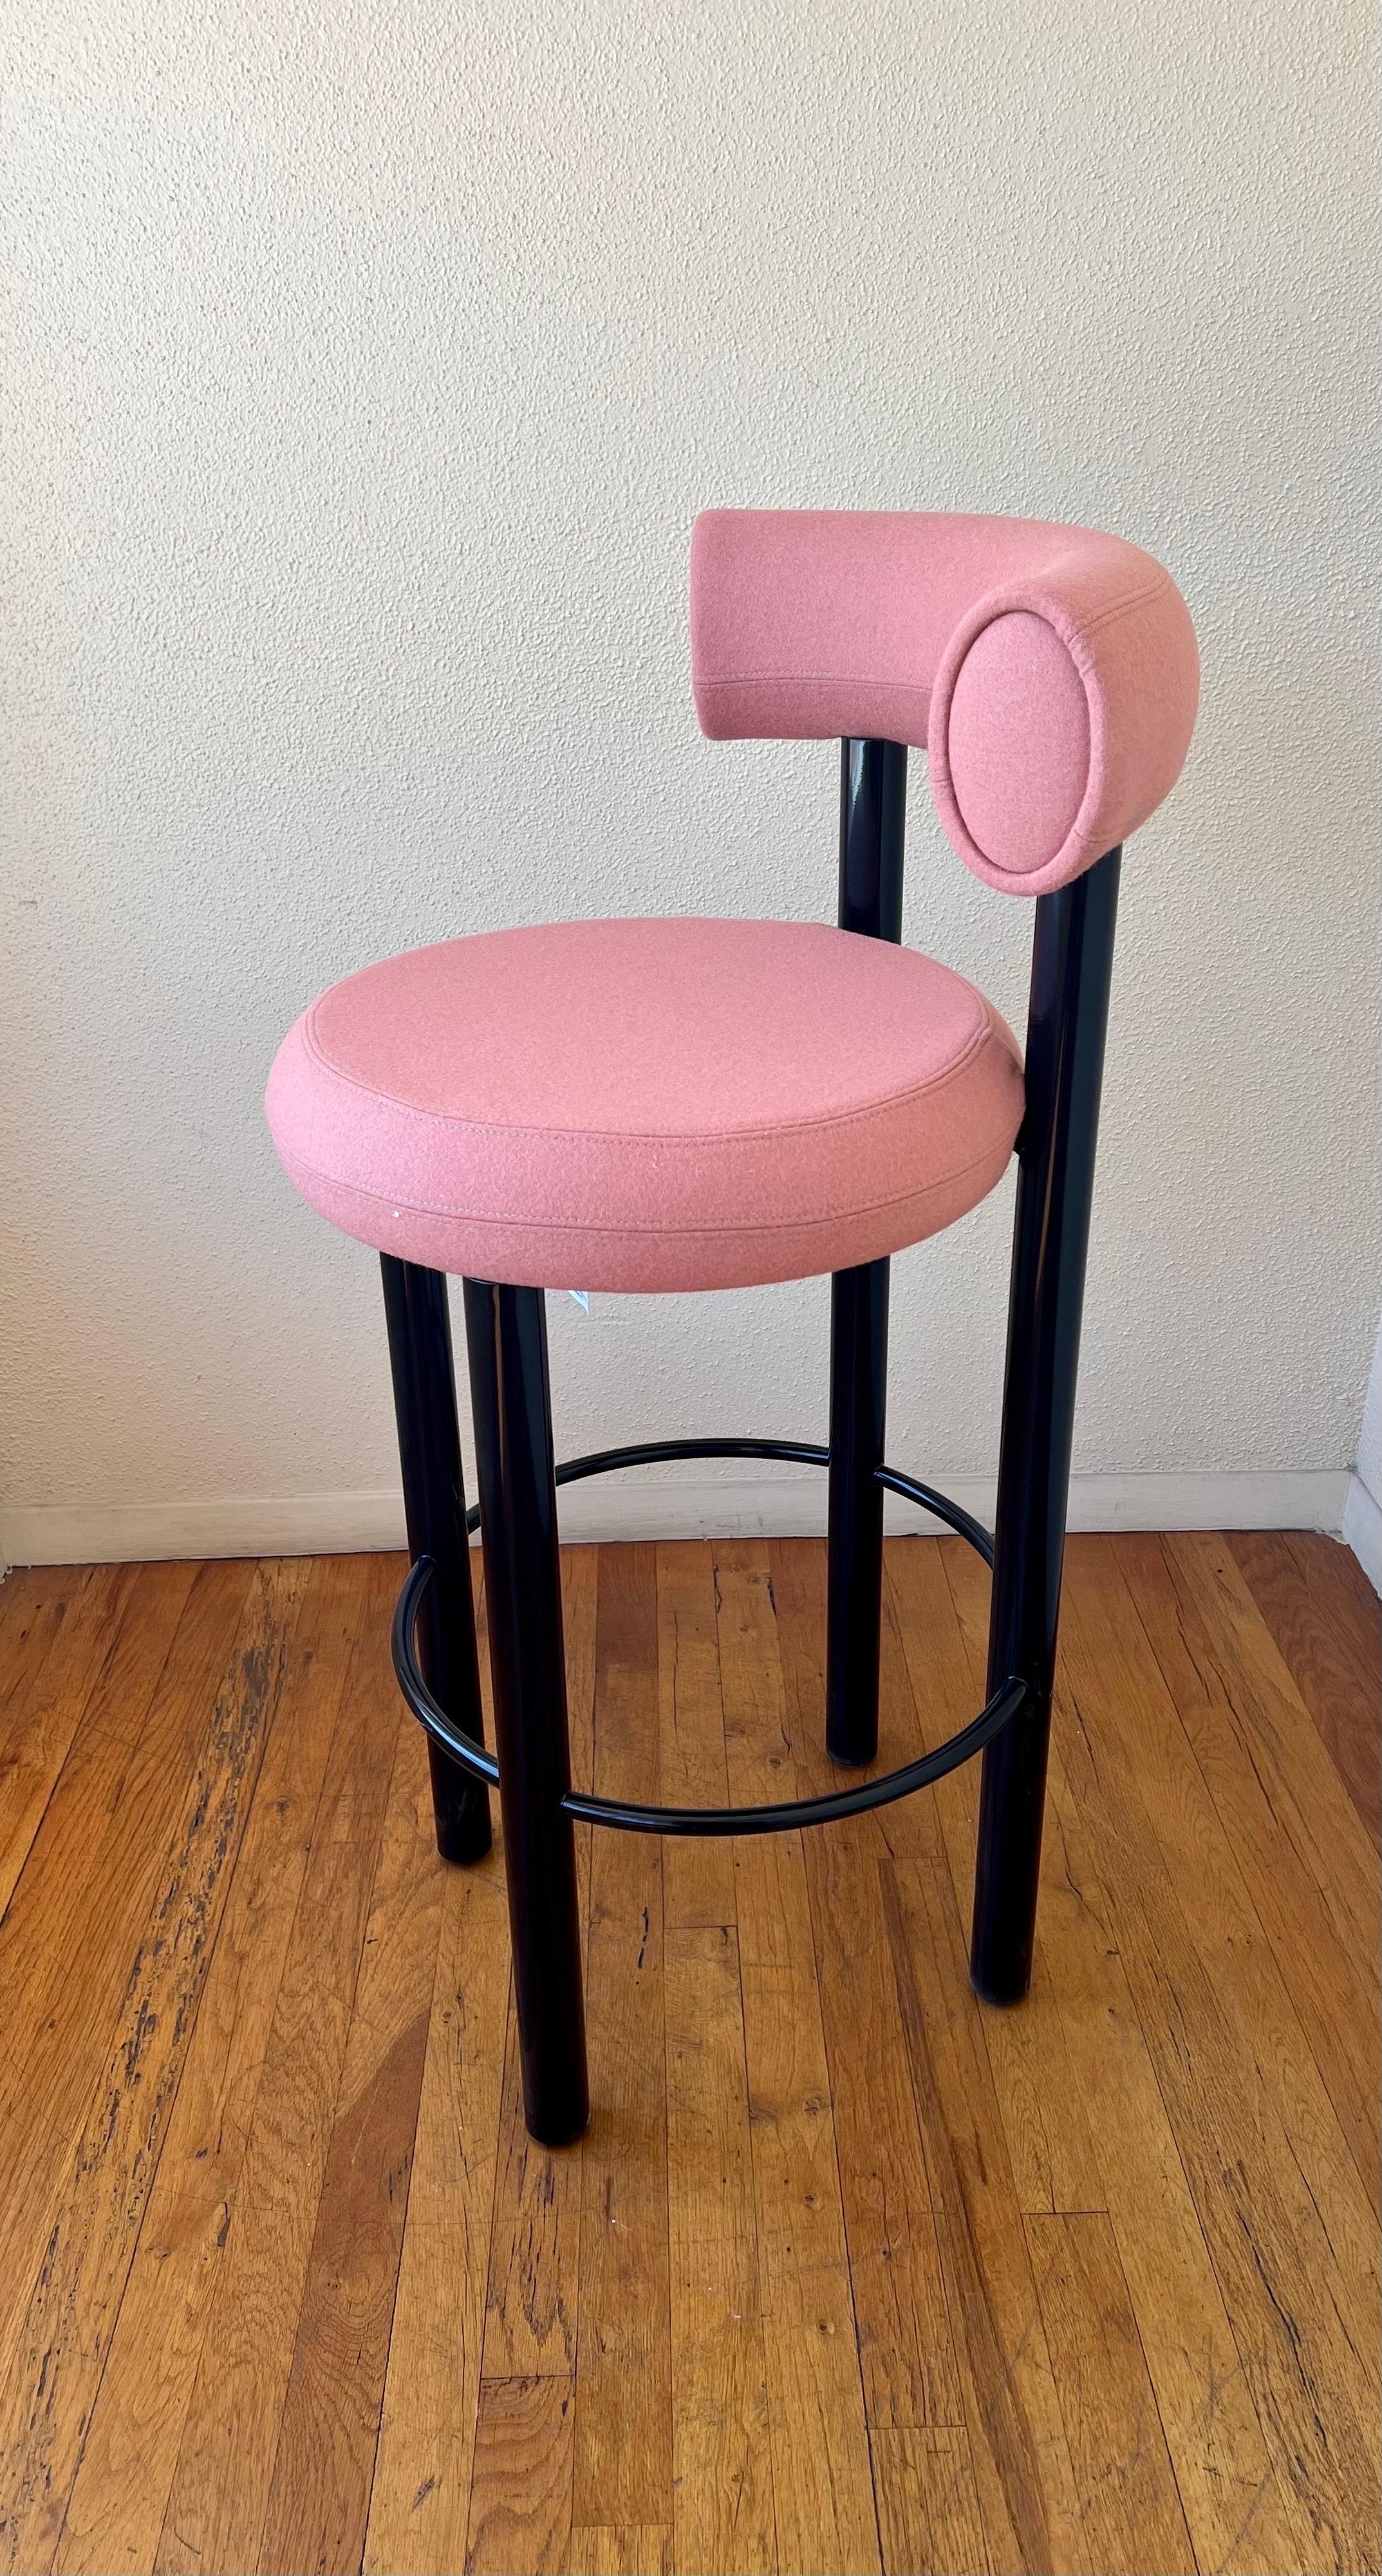 bar stools custom made